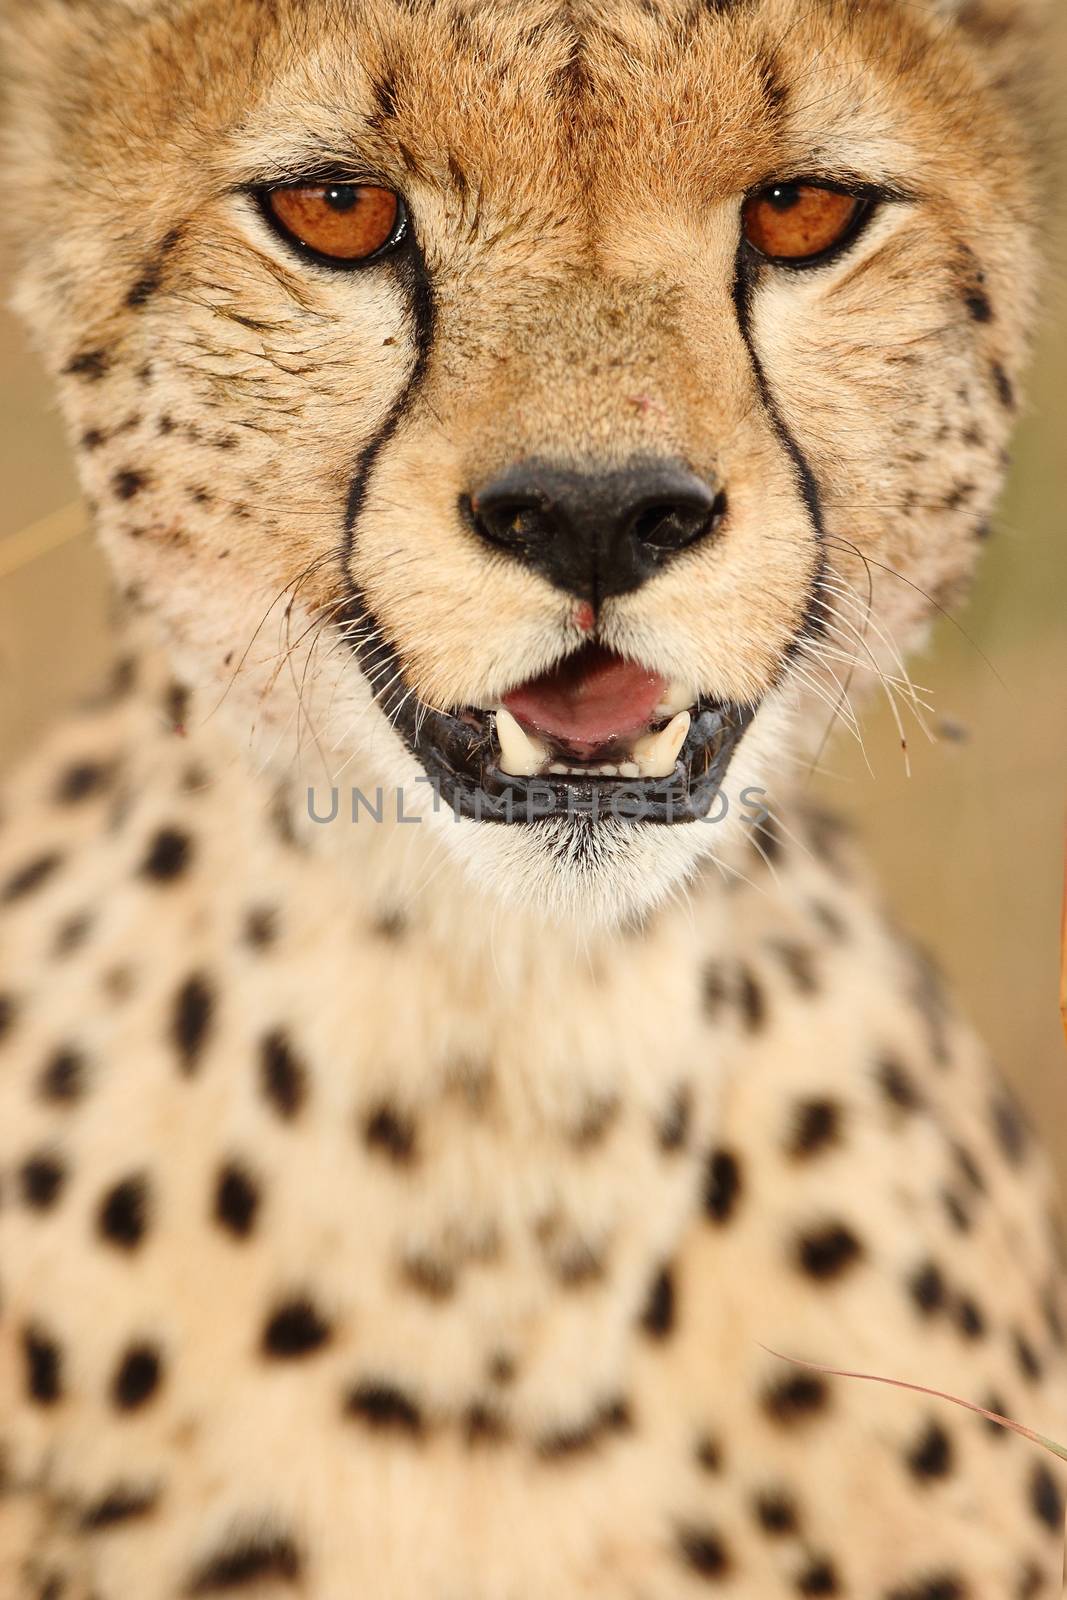 Cheetah in the wilderness of Africa by ozkanzozmen